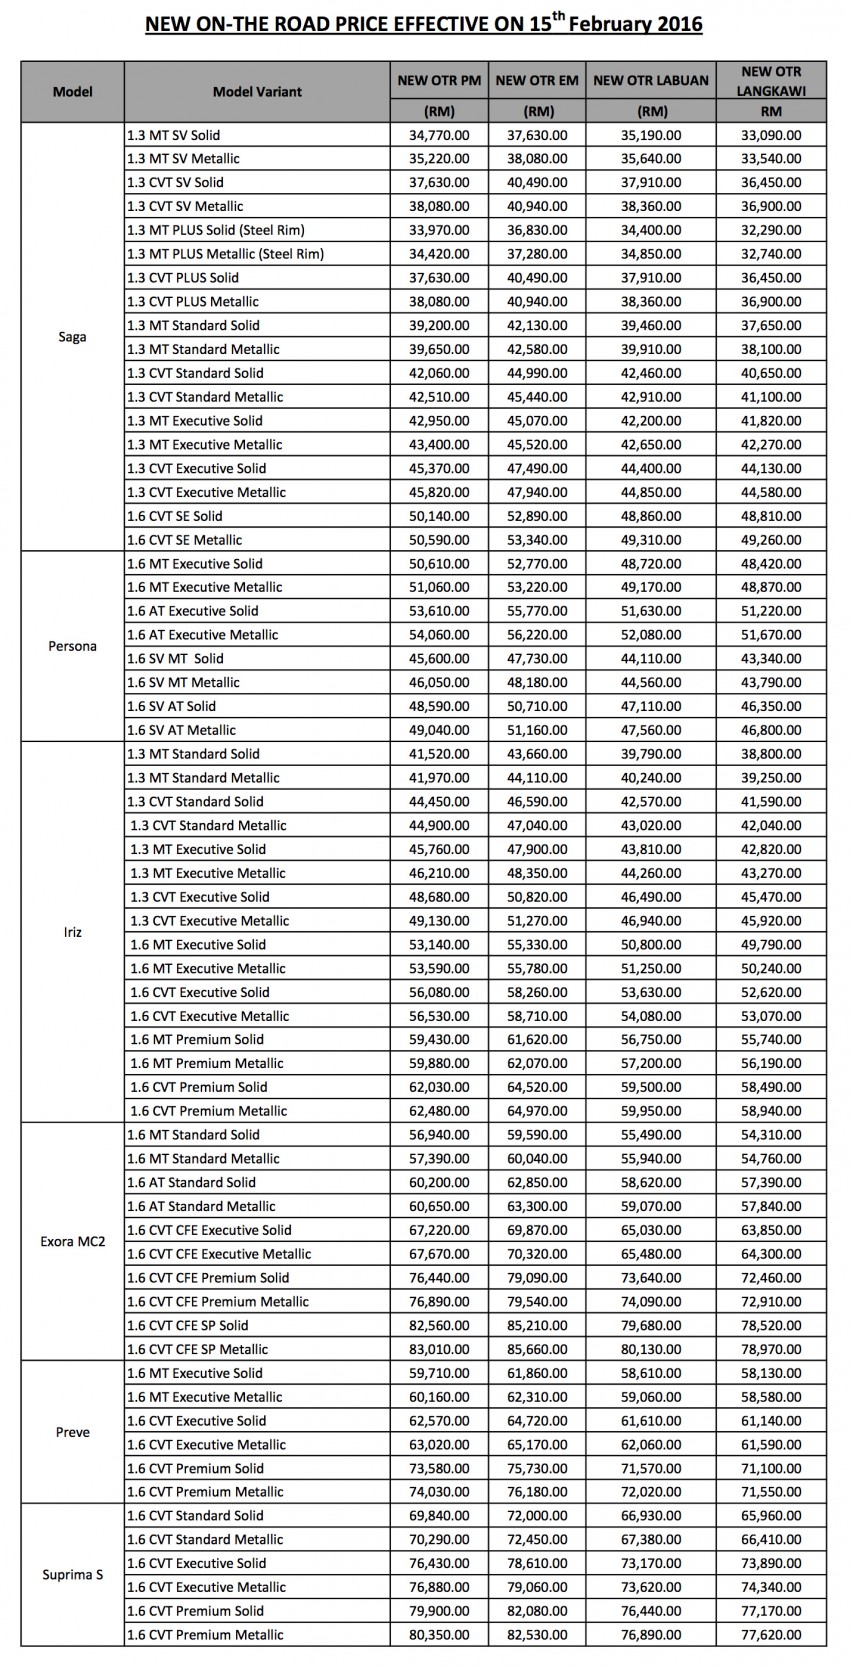 Proton Edar umum harga baharu, naik sehingga RM2k 442274